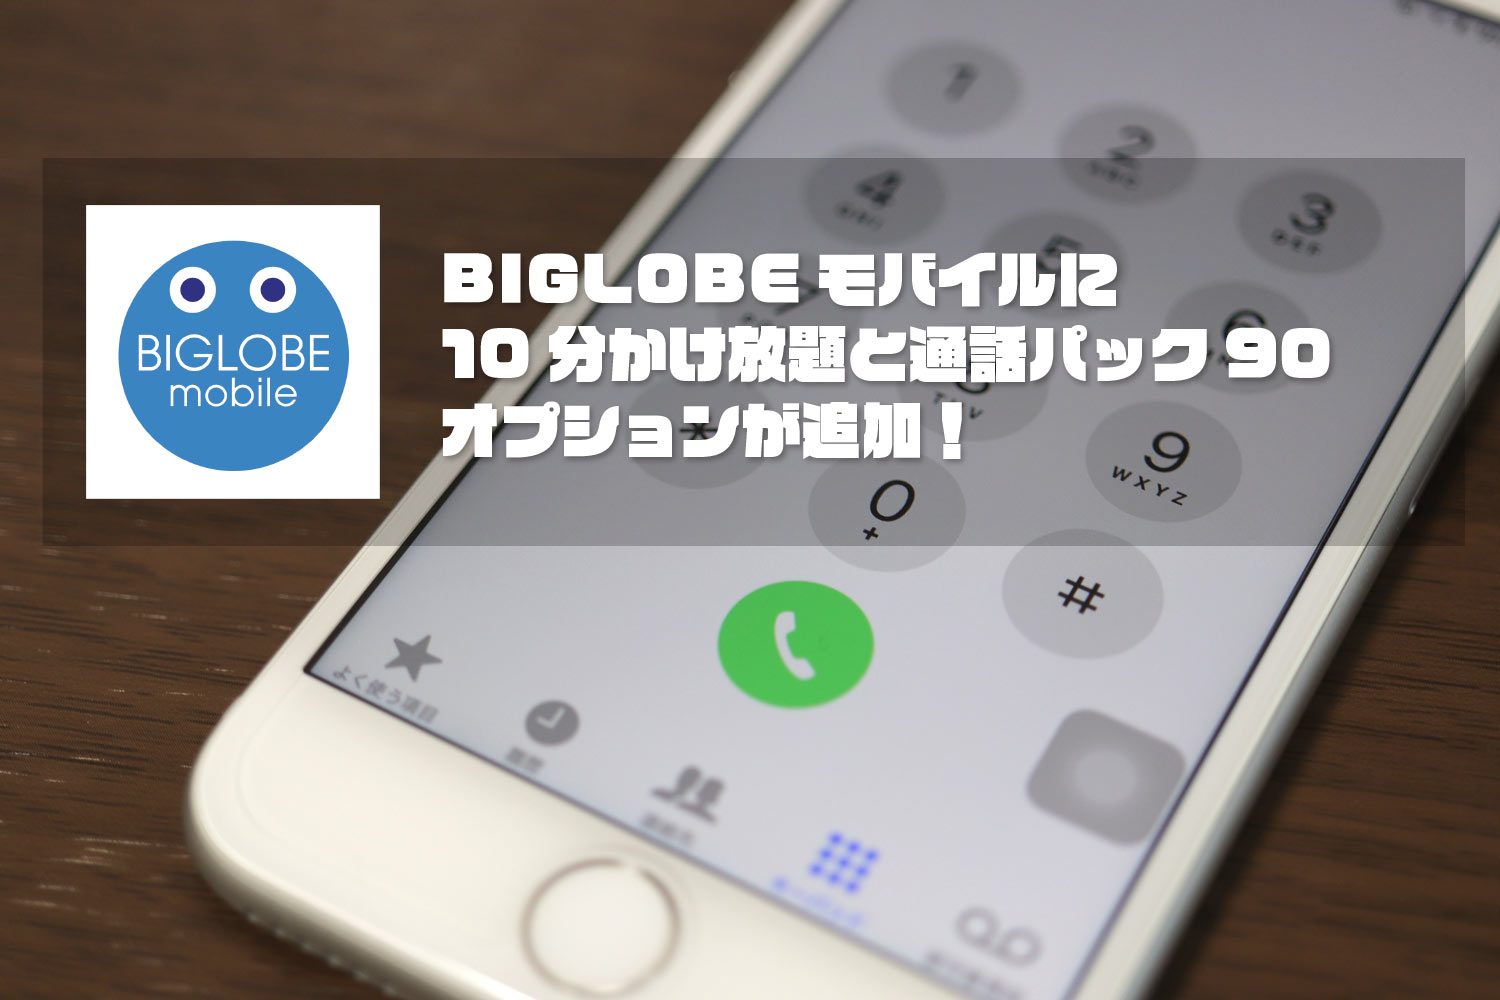 BIGLOBEモバイル 10分かけ放題と通話パック90 